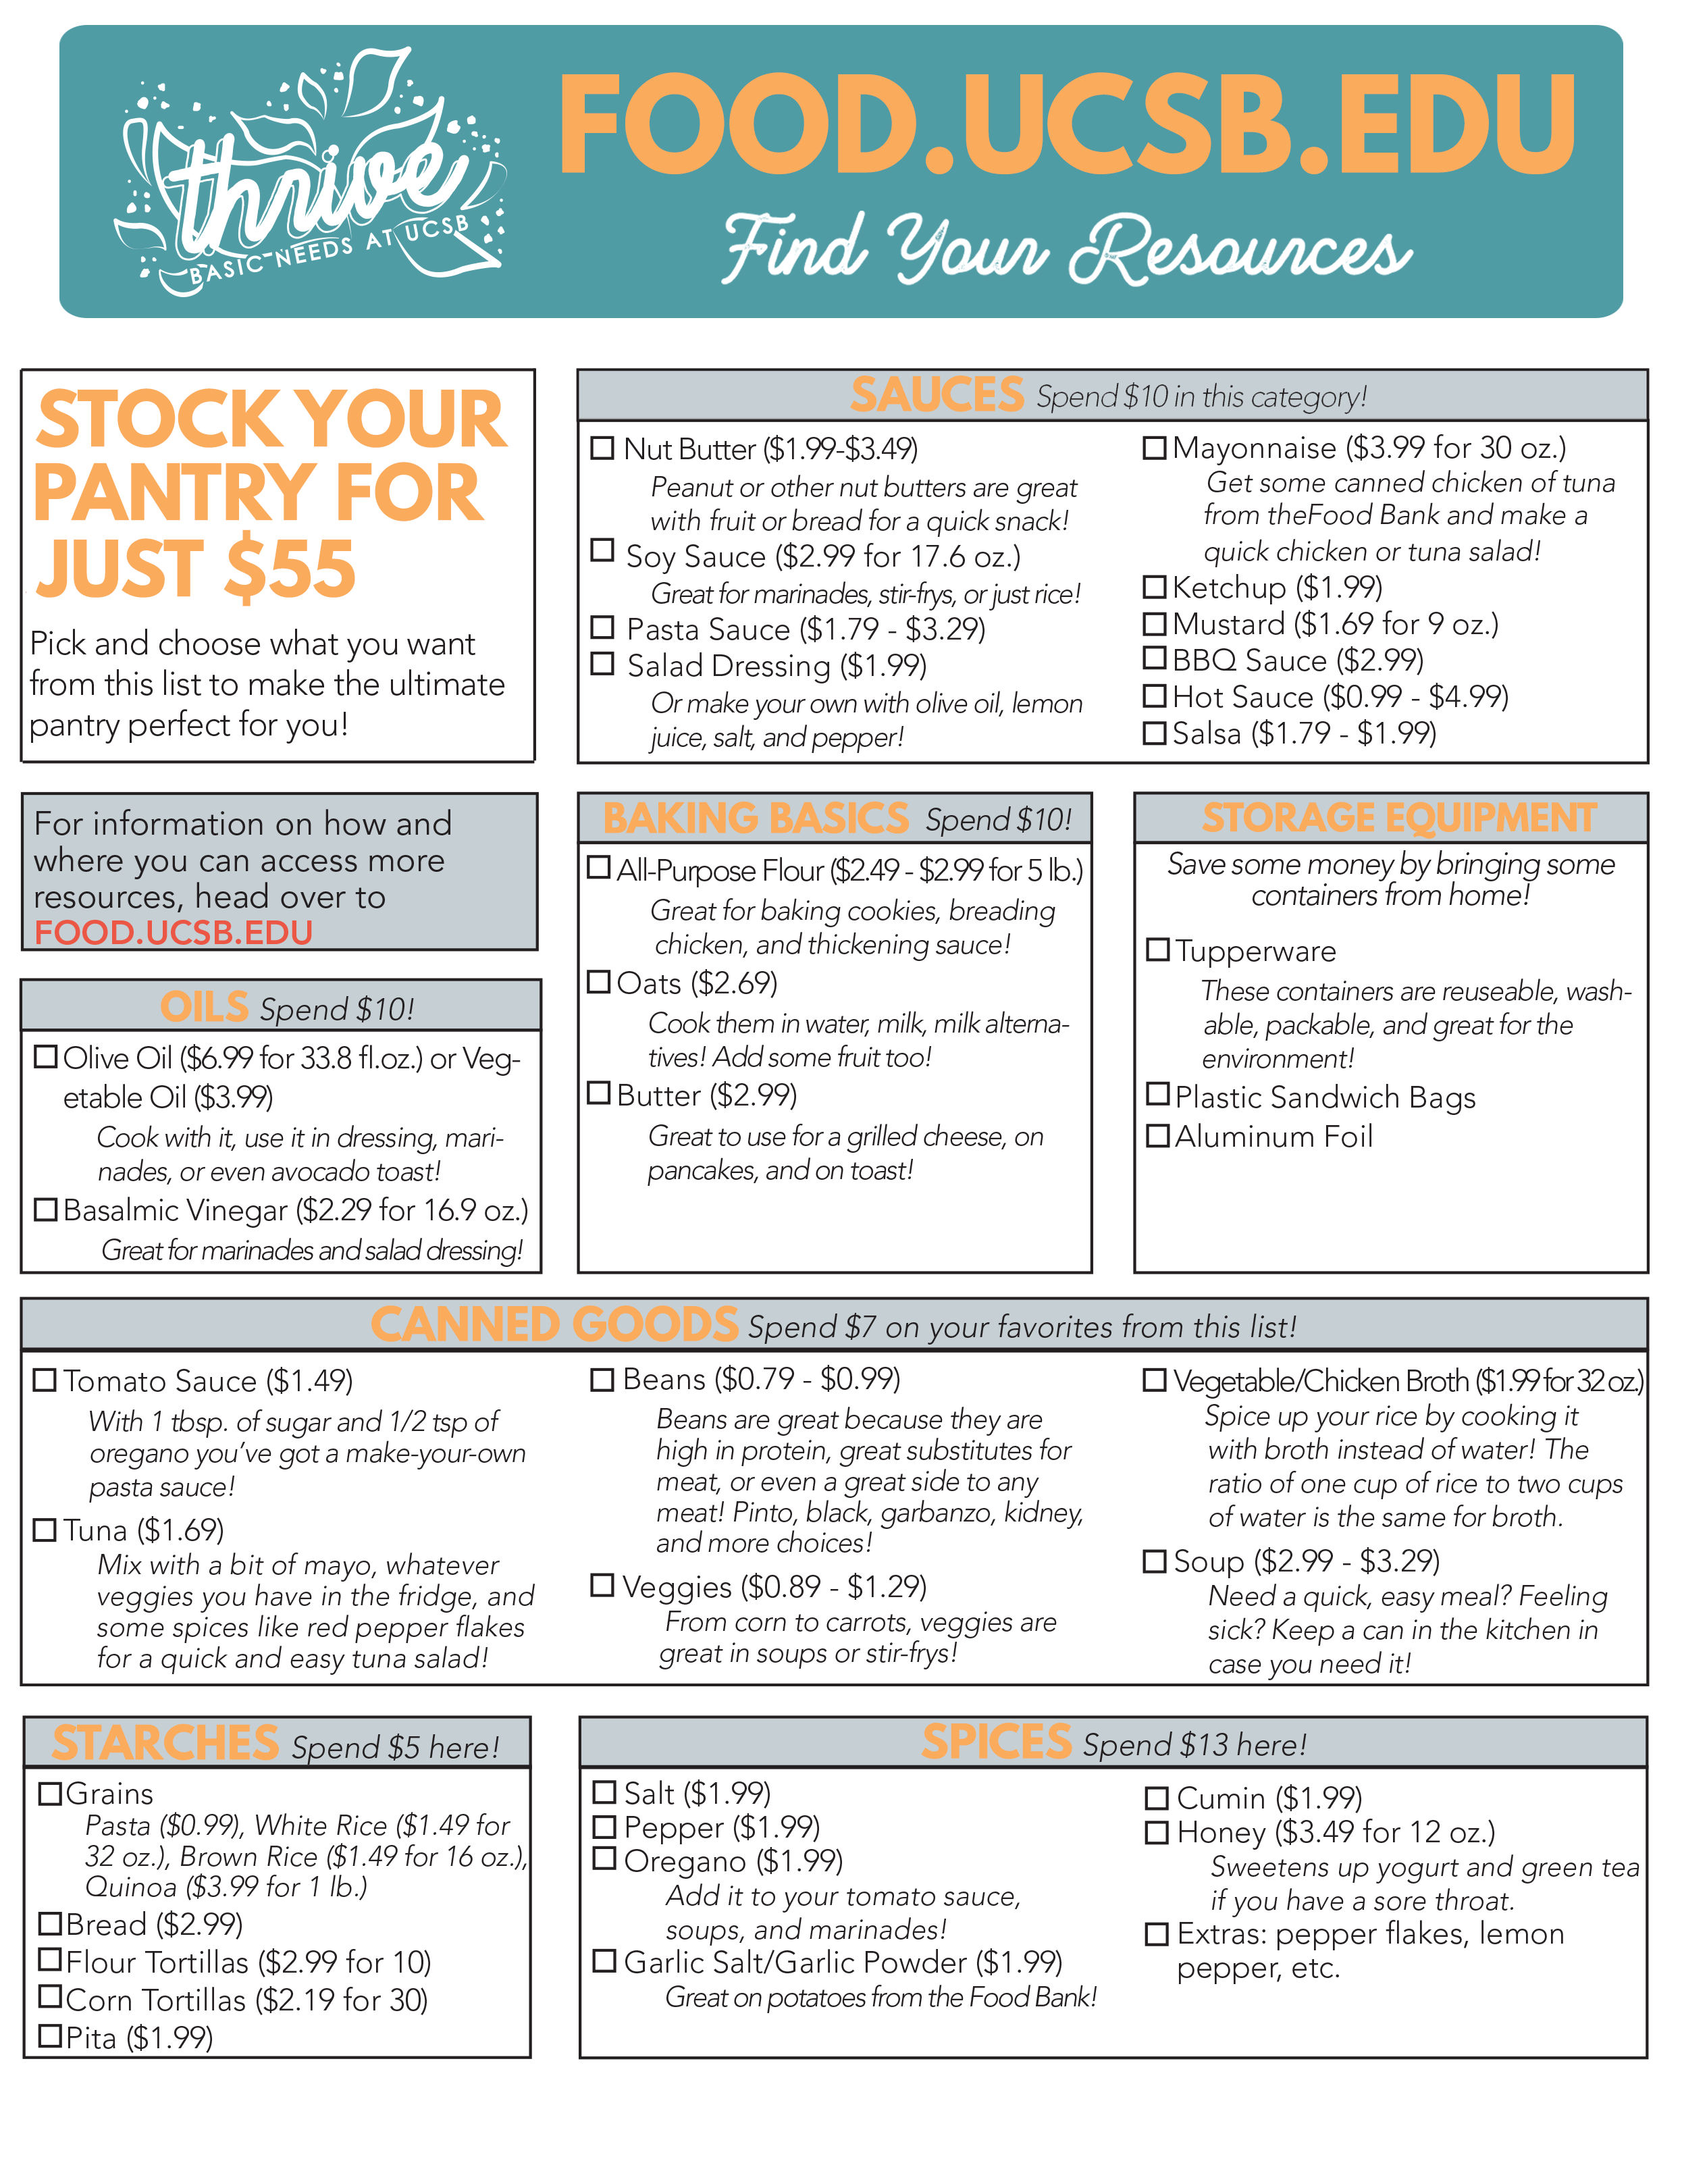 Pantry Stocking Checklist